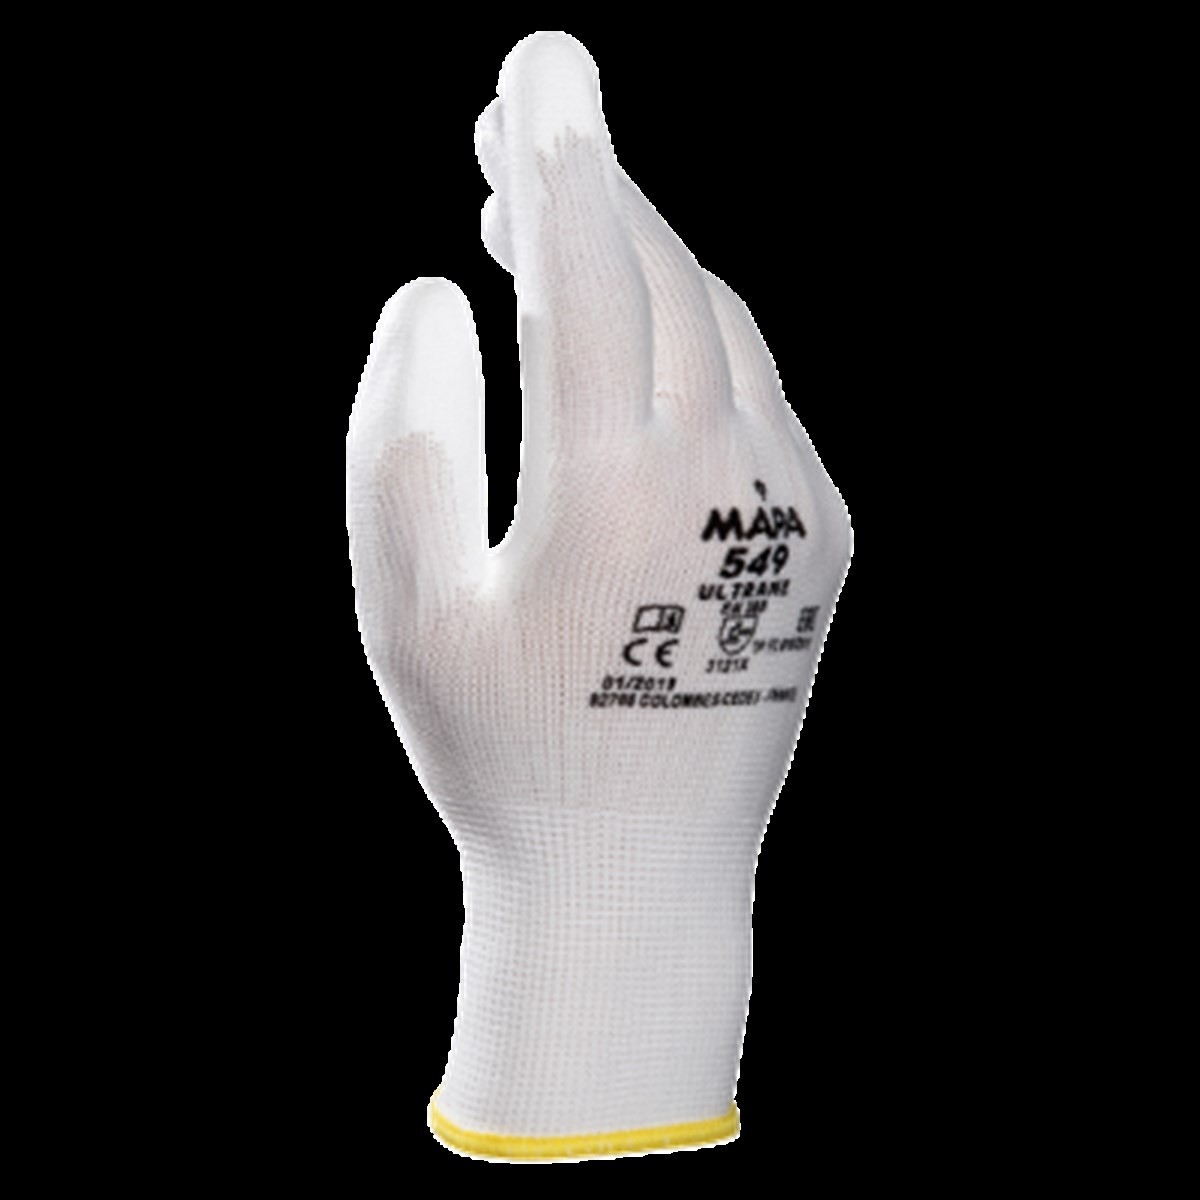 MAPA Ultrane 549 Gloves (5 Pairs)